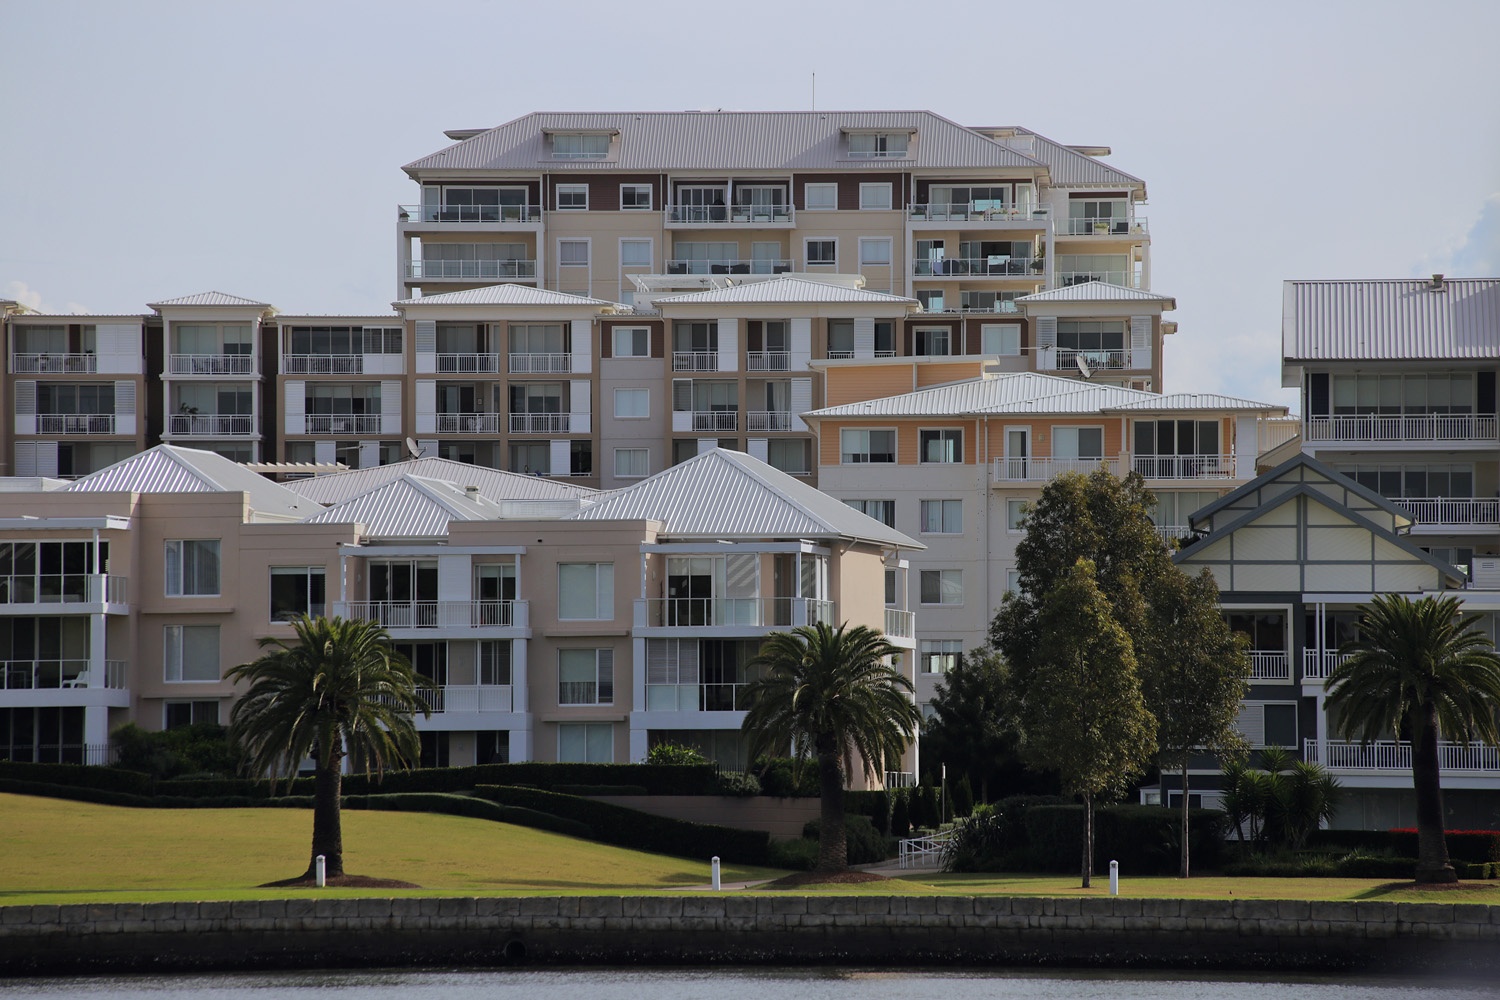 bill-hocker-sydney-harbour-housing-sydney-australia-2015